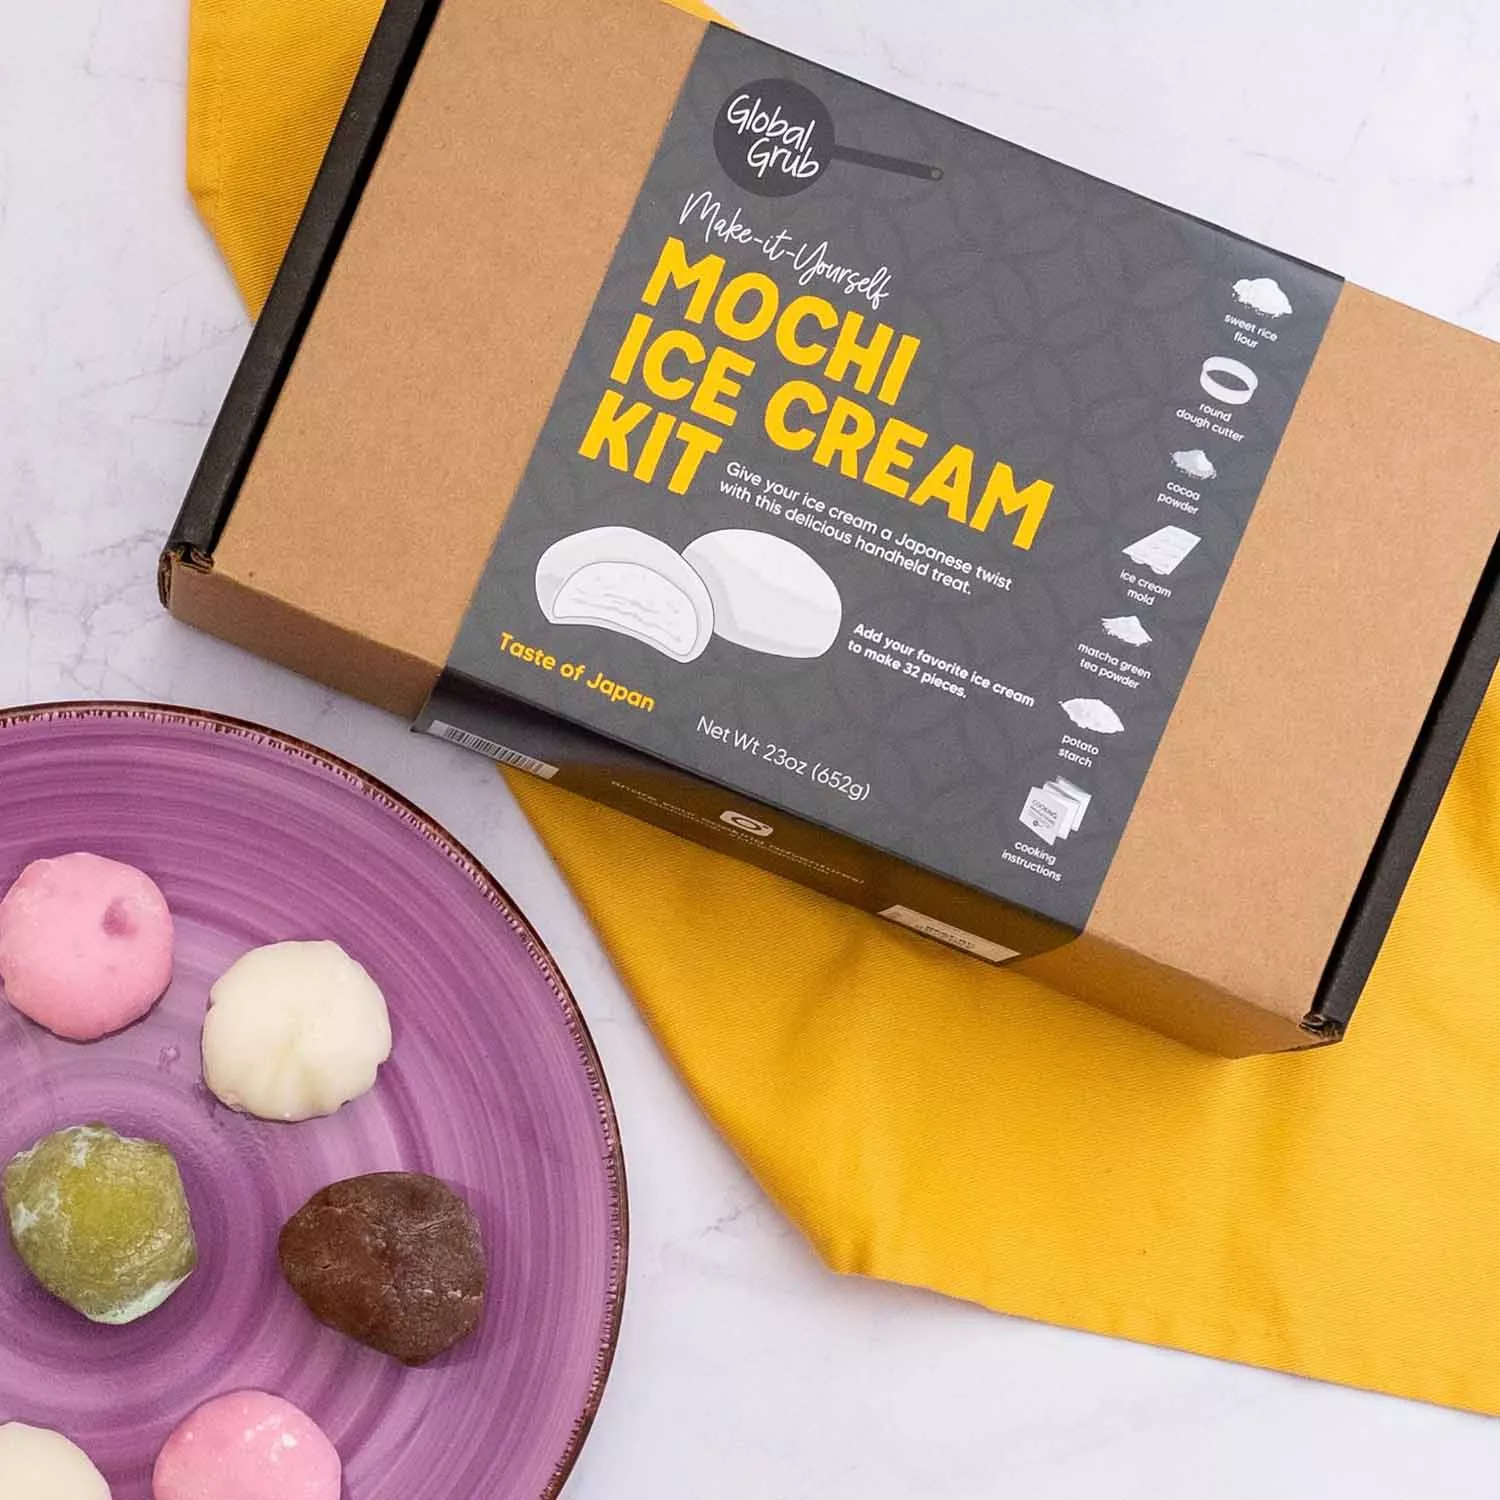 Global Grub Mochi Ice Cream Kit Make It Yourself Cooking Adventure DYI